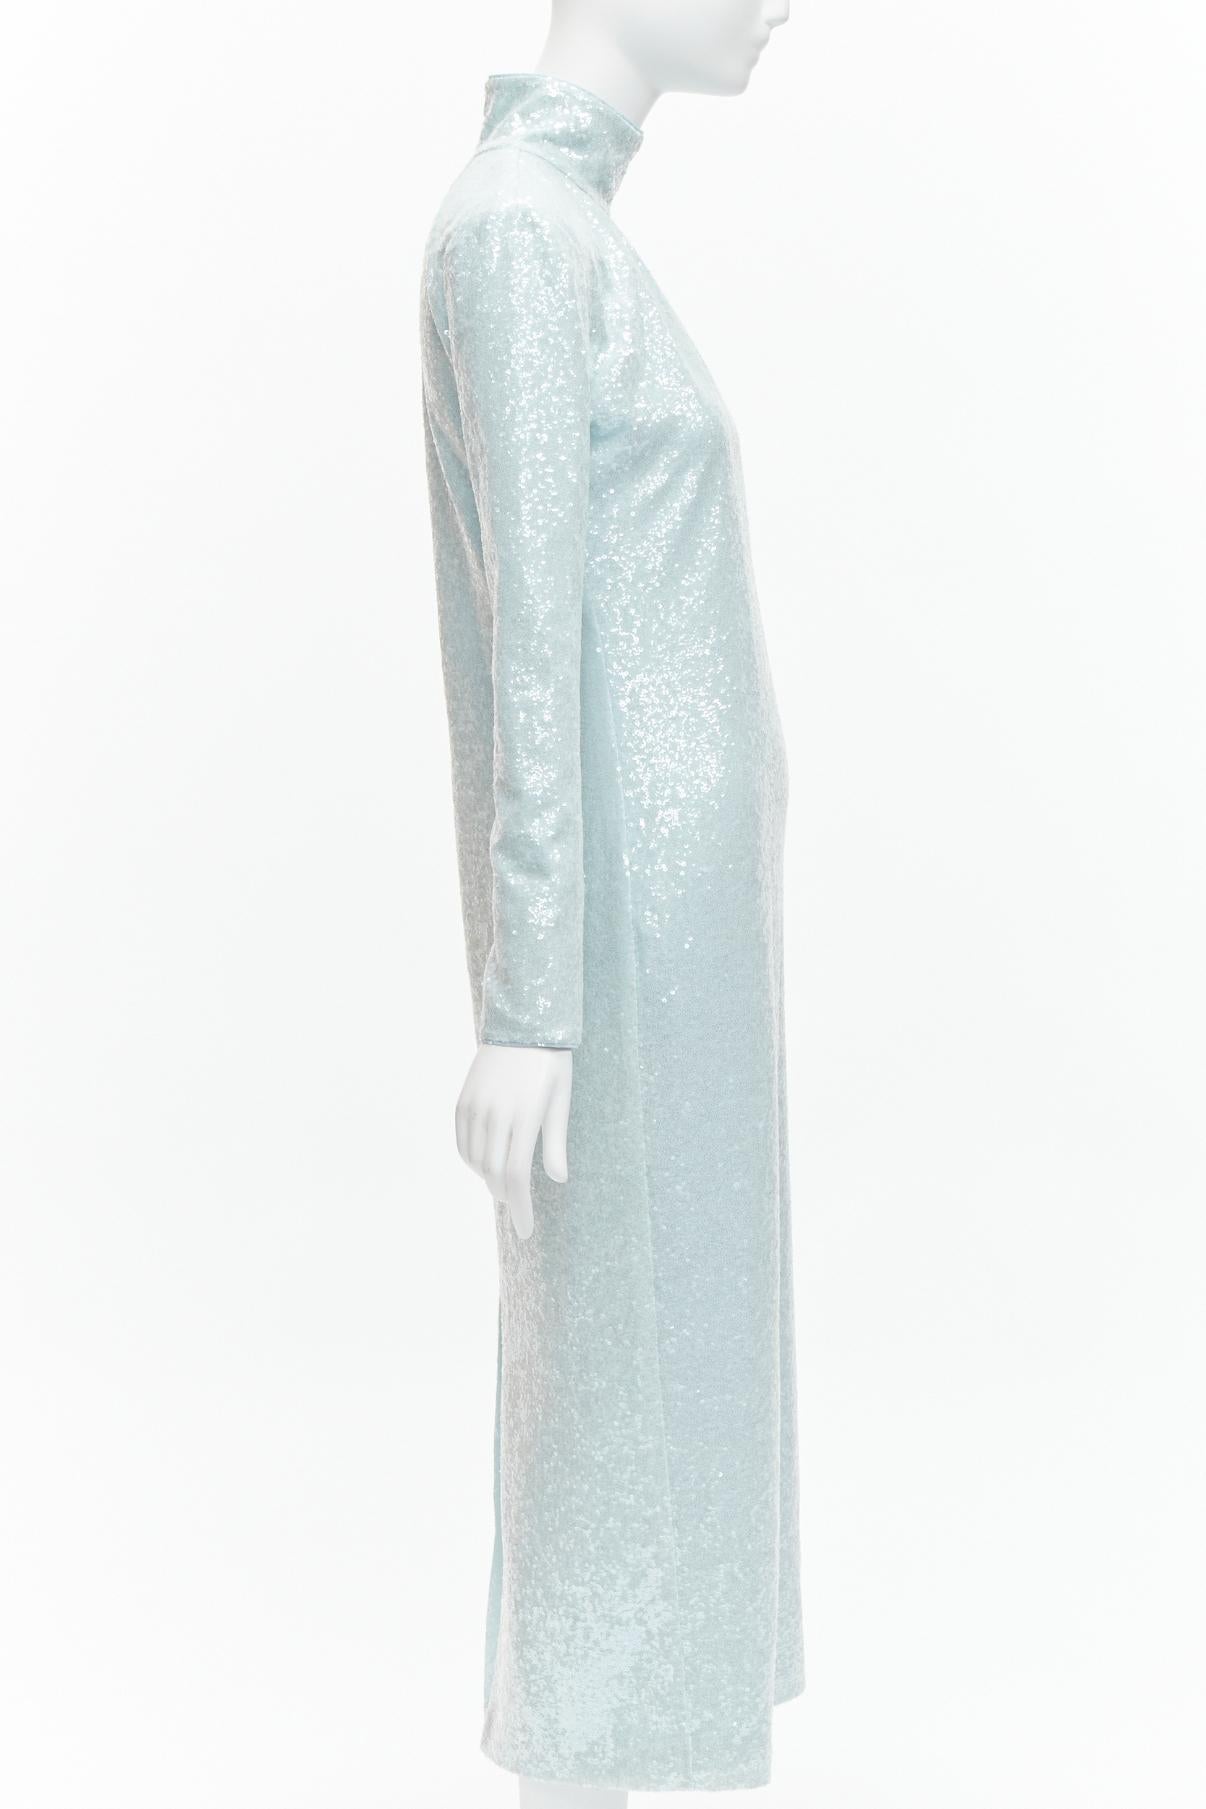 Women's 16ARLINGTON Vida light blue sequins high neck long sleeves cocktail dress UK6 XS For Sale